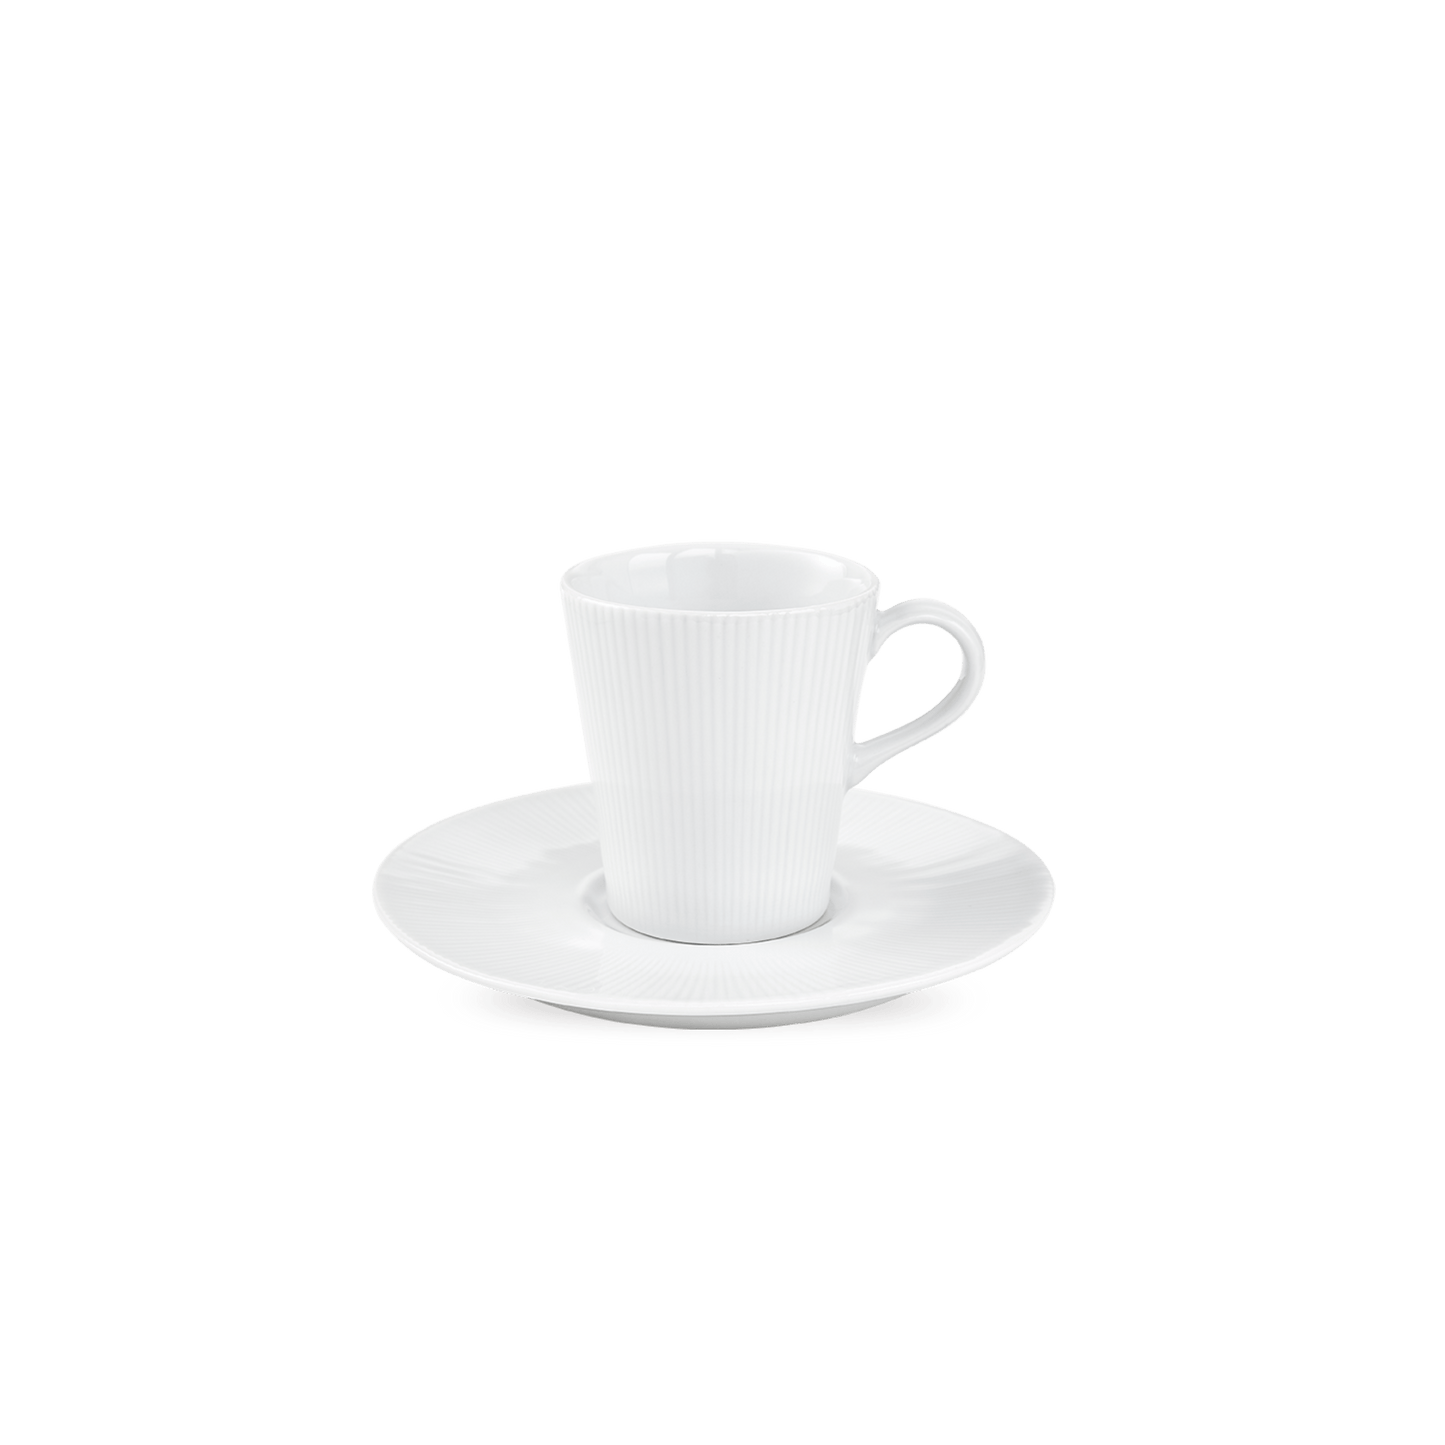 Pillivuyt Shop Cup and Saucer 2 oz cup + 5.25" diam saucer - Set of 4 Eventail Espresso Cup and Saucer, Set of 4